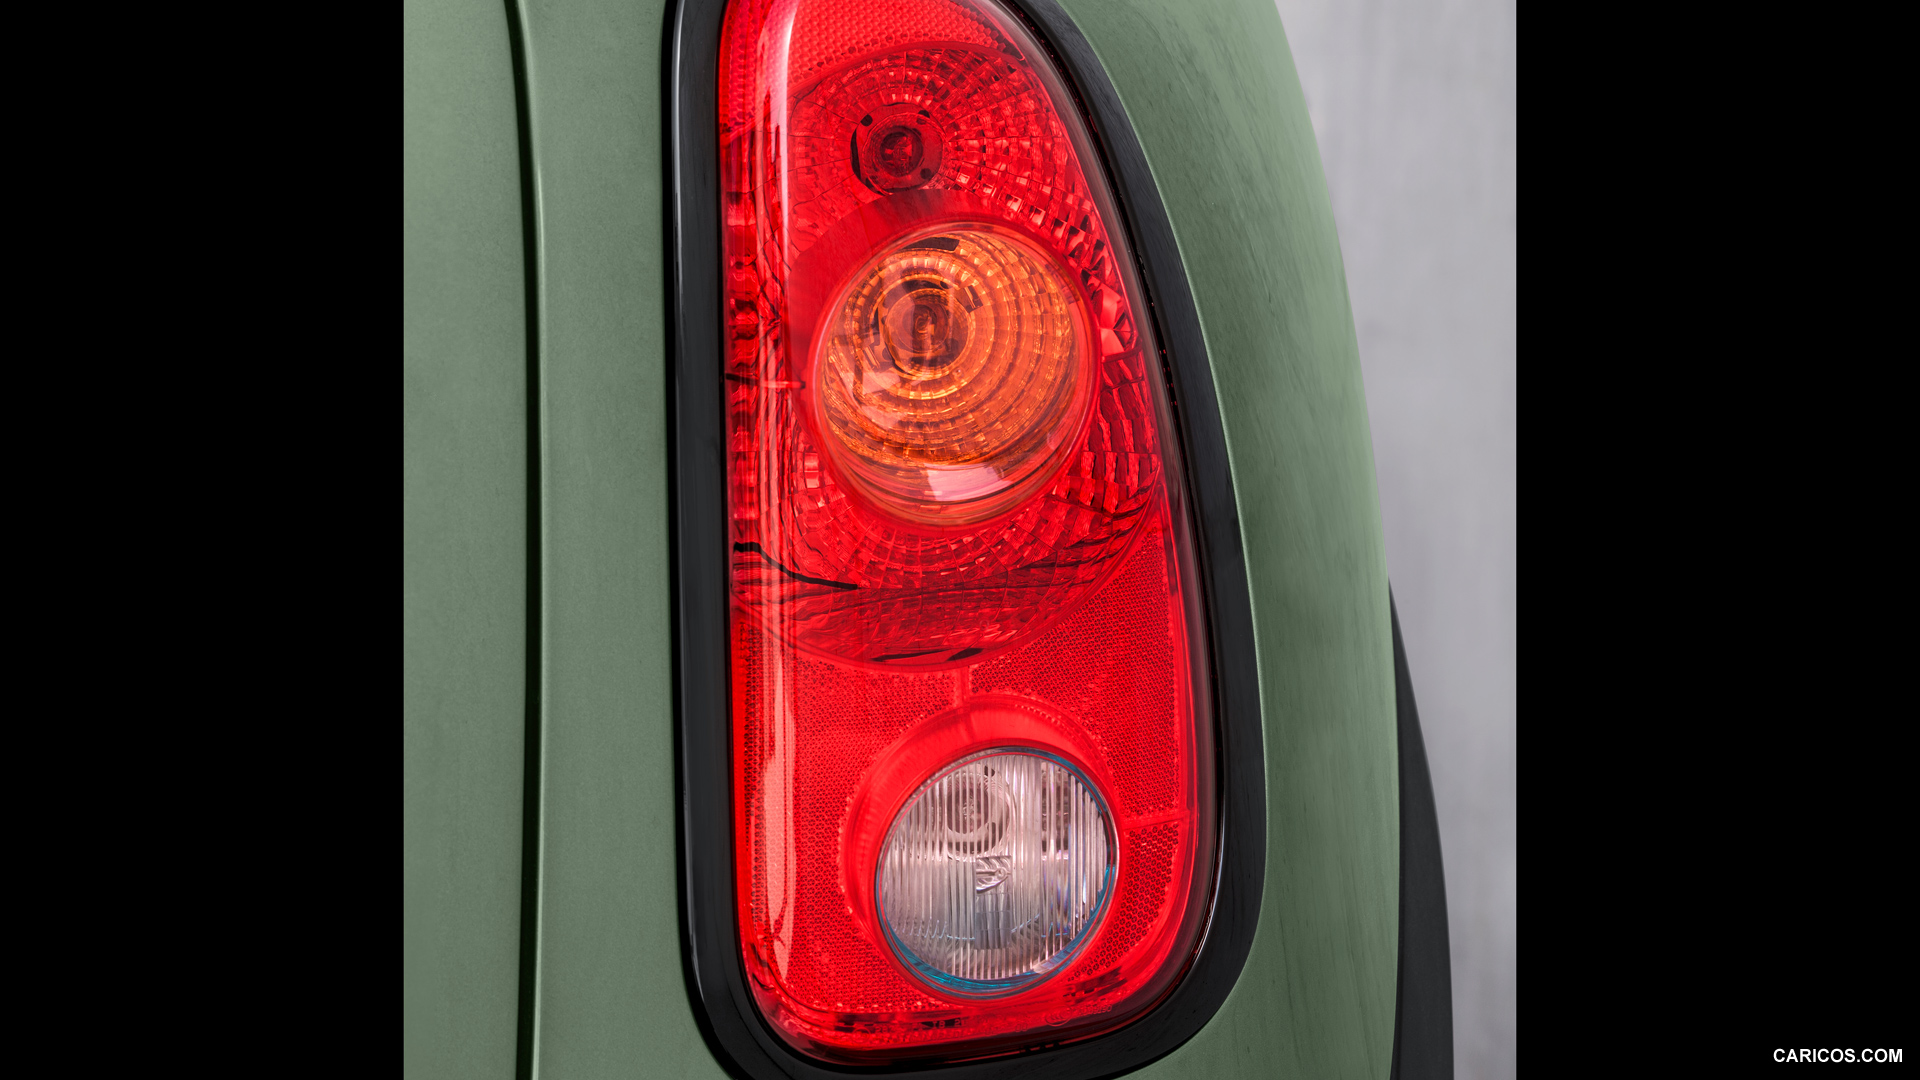 2015 MINI Cooper SD Countryman  - Tail Light, #38 of 291